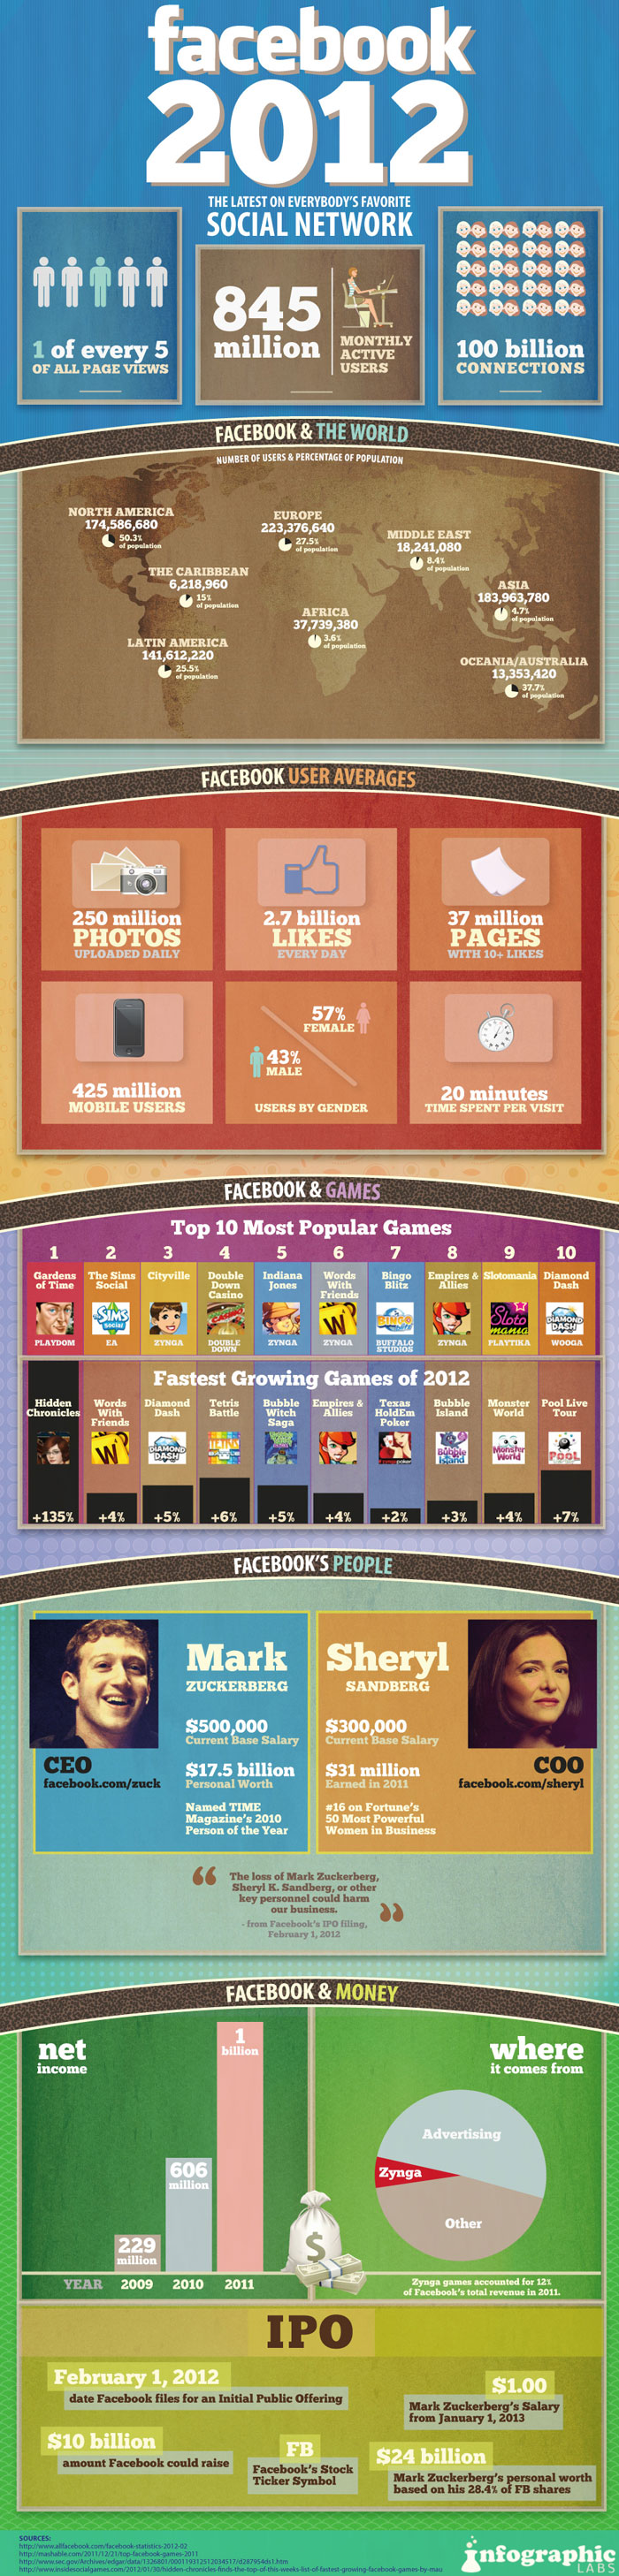 facebook-user-statistics-2012-infographic.jpg